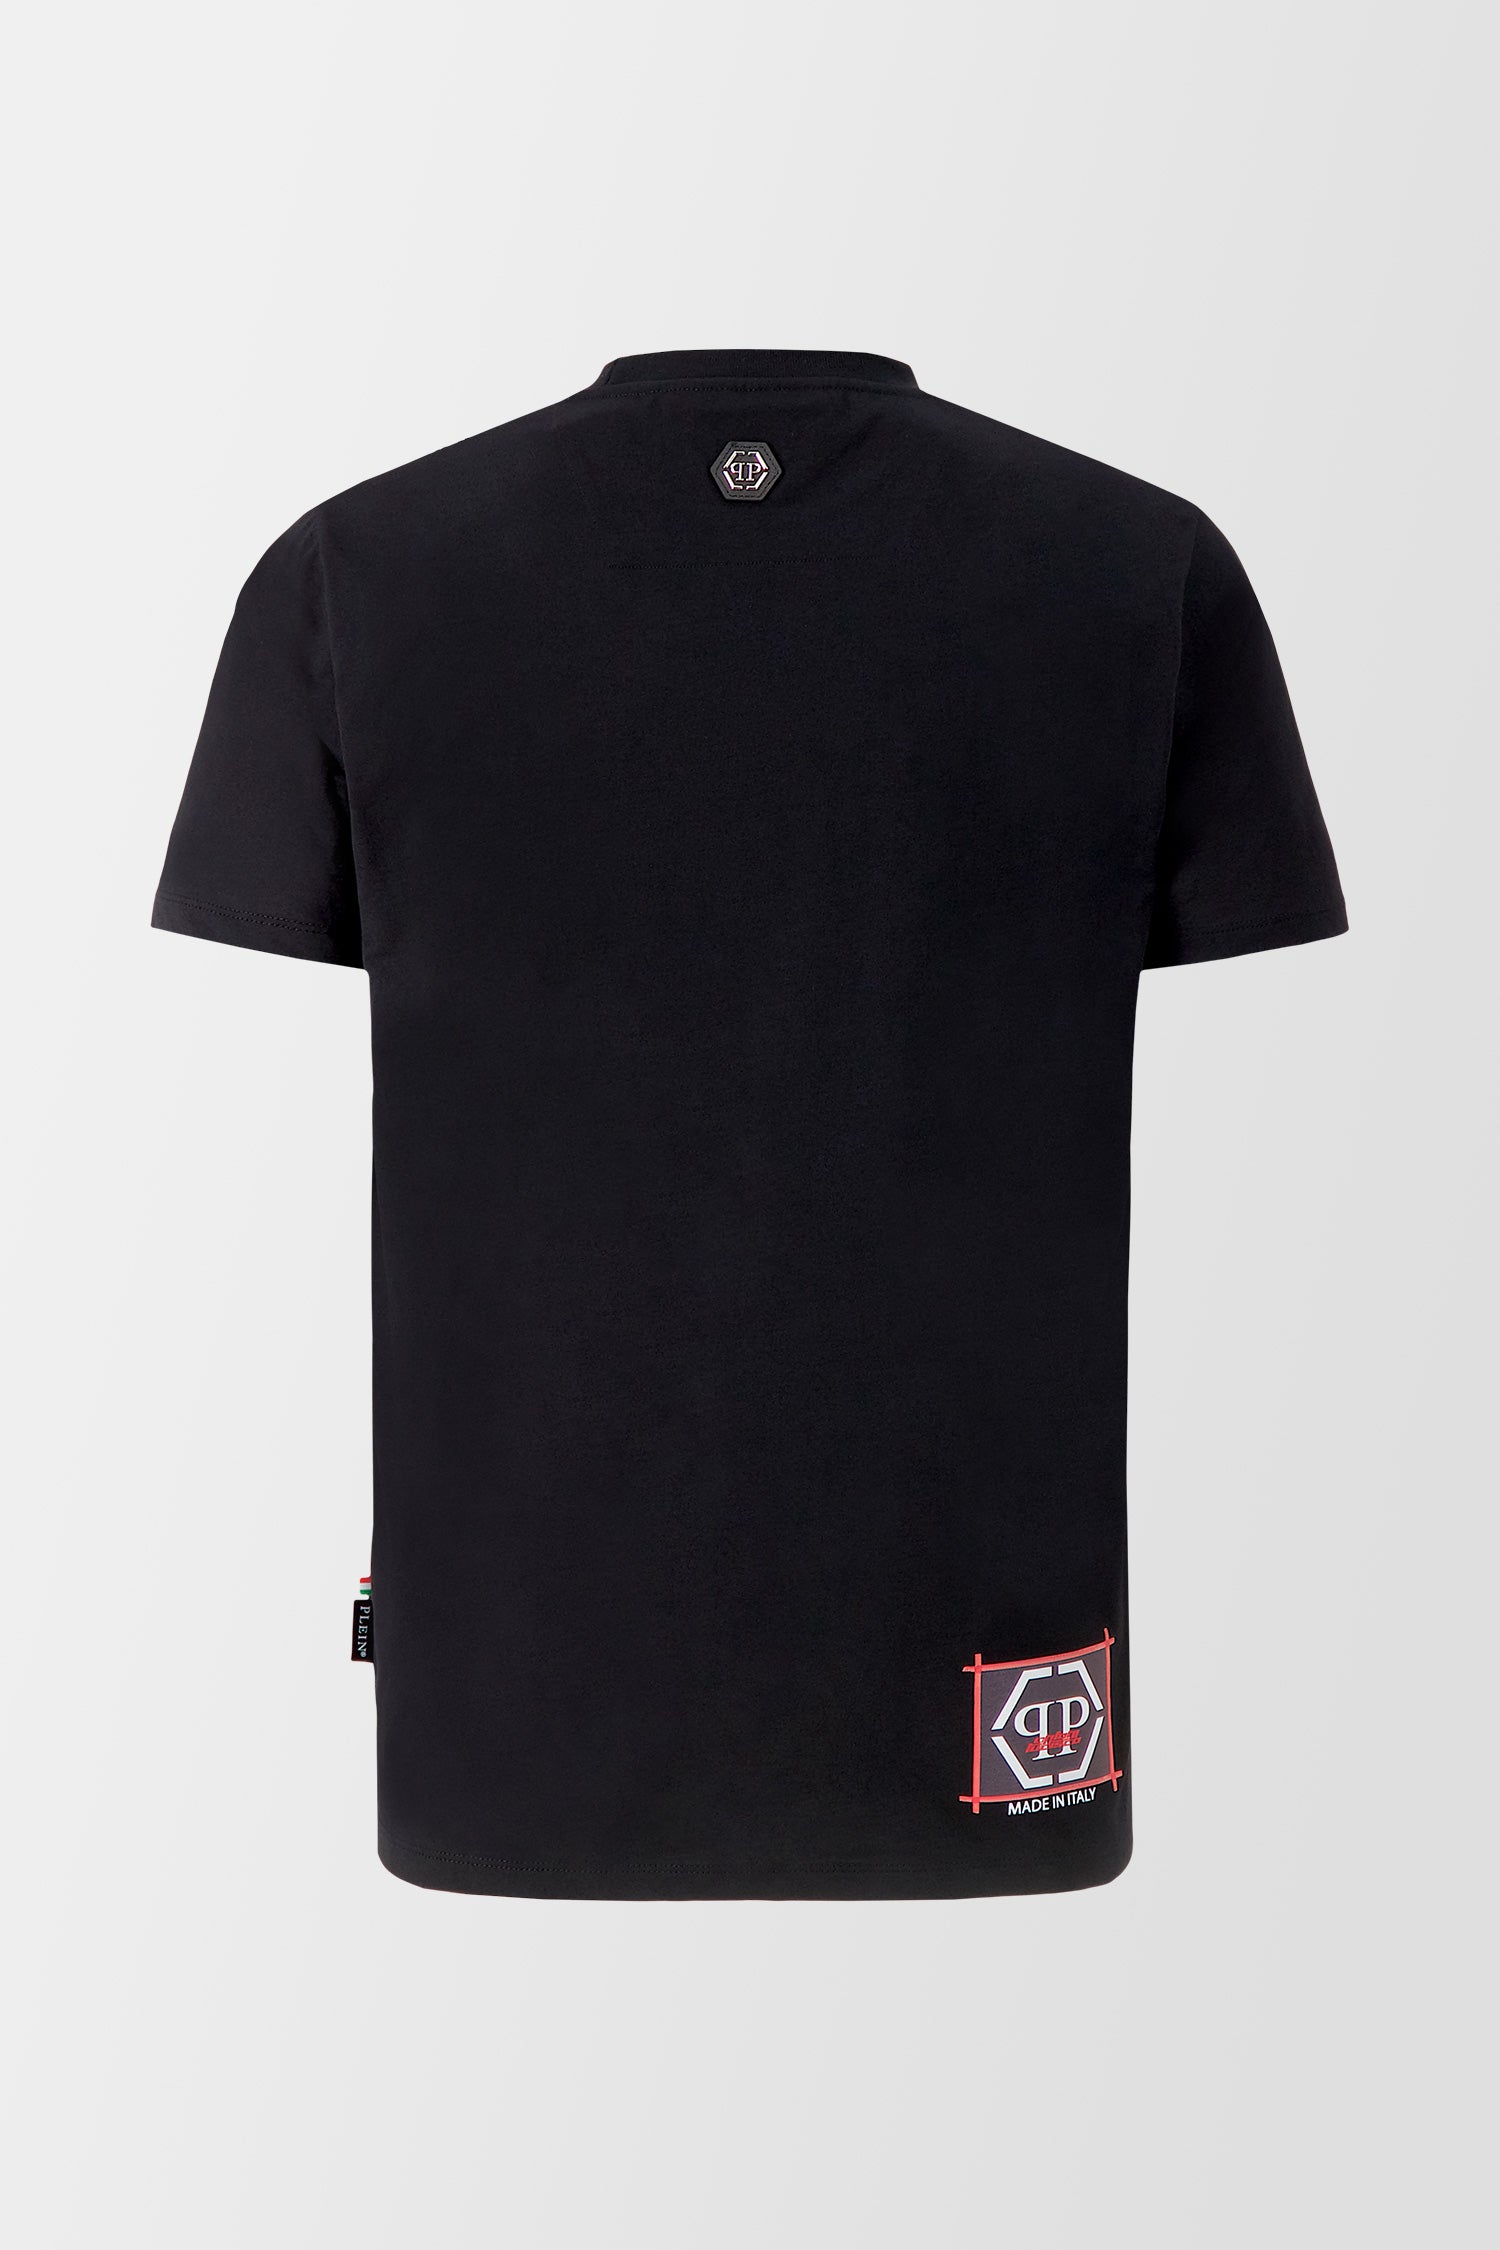 Philipp Plein Black Round Neck Limited SS PP Lips T-Shirt